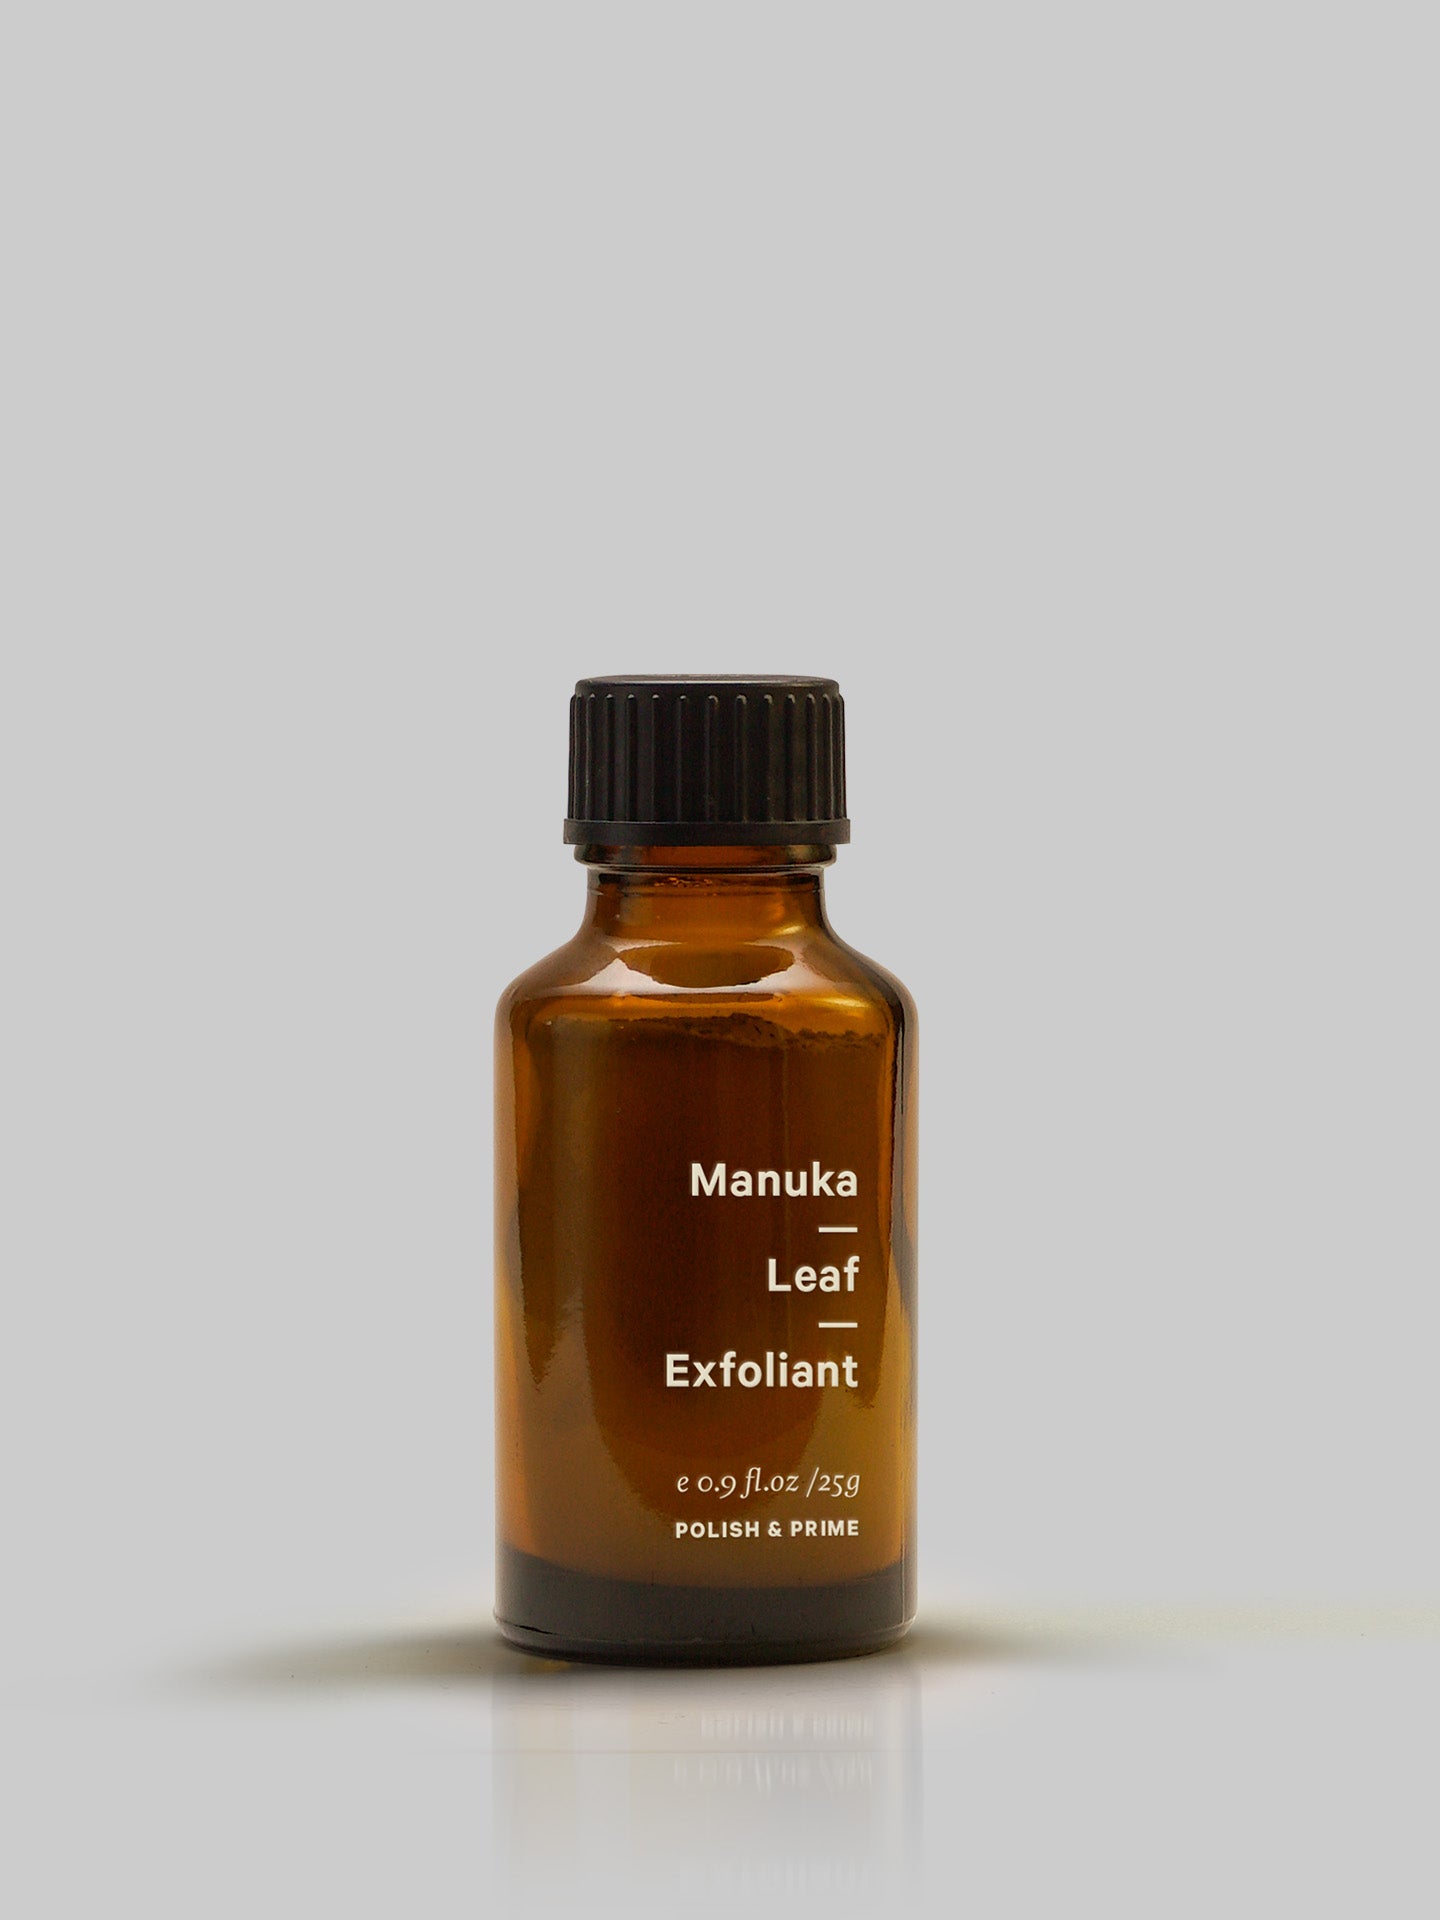 A bottle of Manuka Leaf – Exfoliant by MARYSE on a grey background.